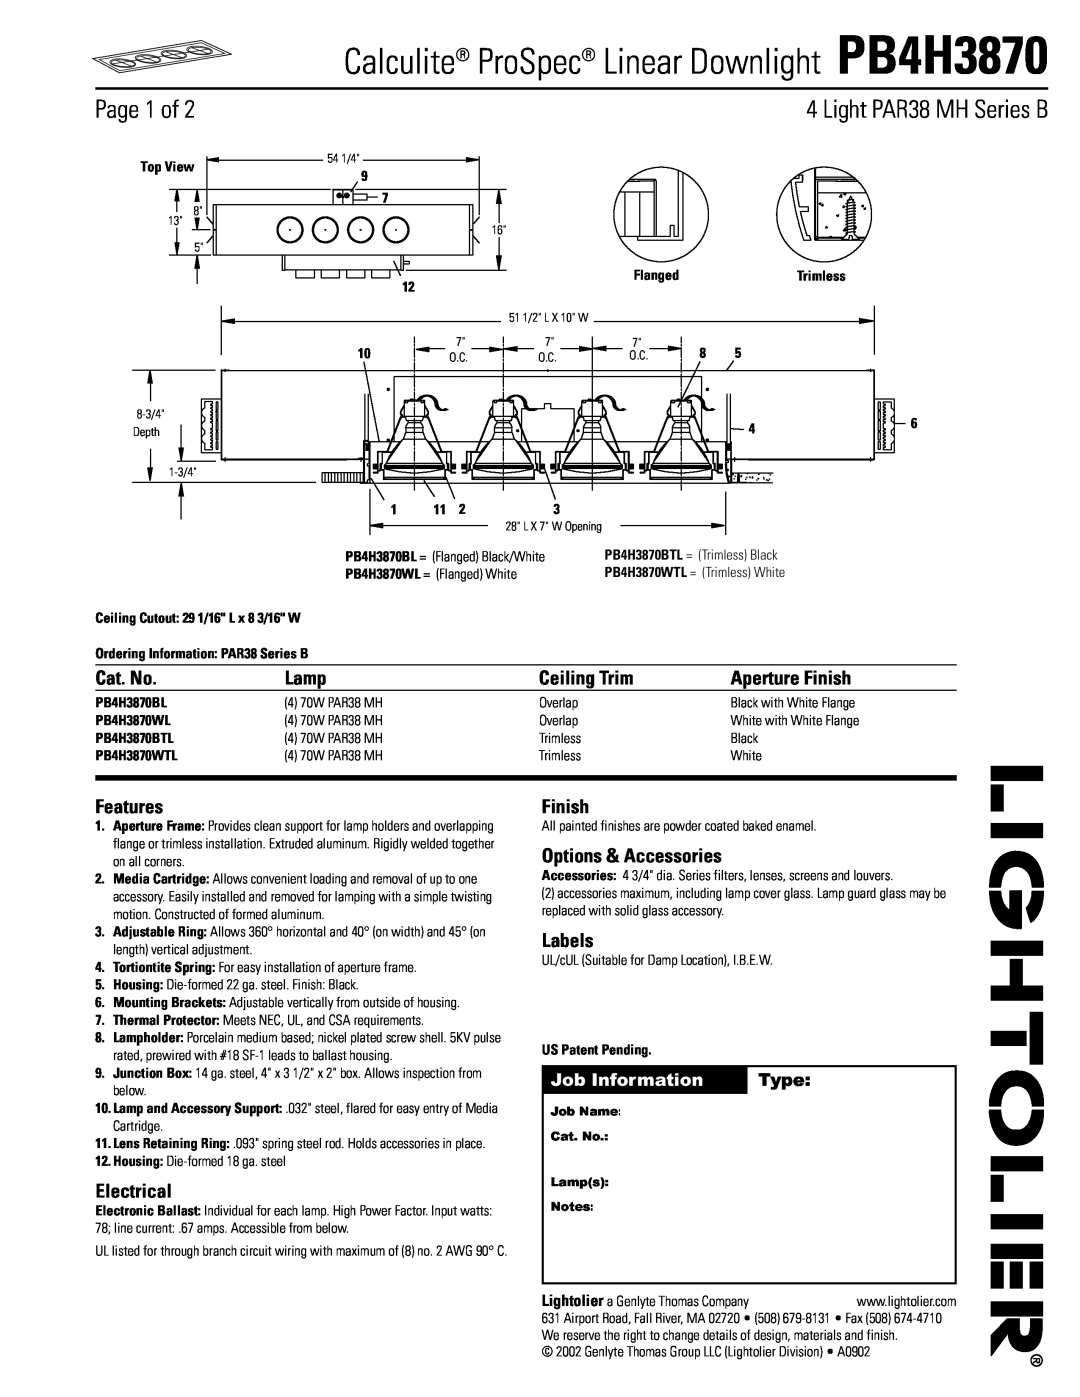 Lightolier PB4H3870 manual Page 1 of, Light PAR38 MH Series B, Cat. No, Lamp, Ceiling Trim, Aperture Finish, Features 